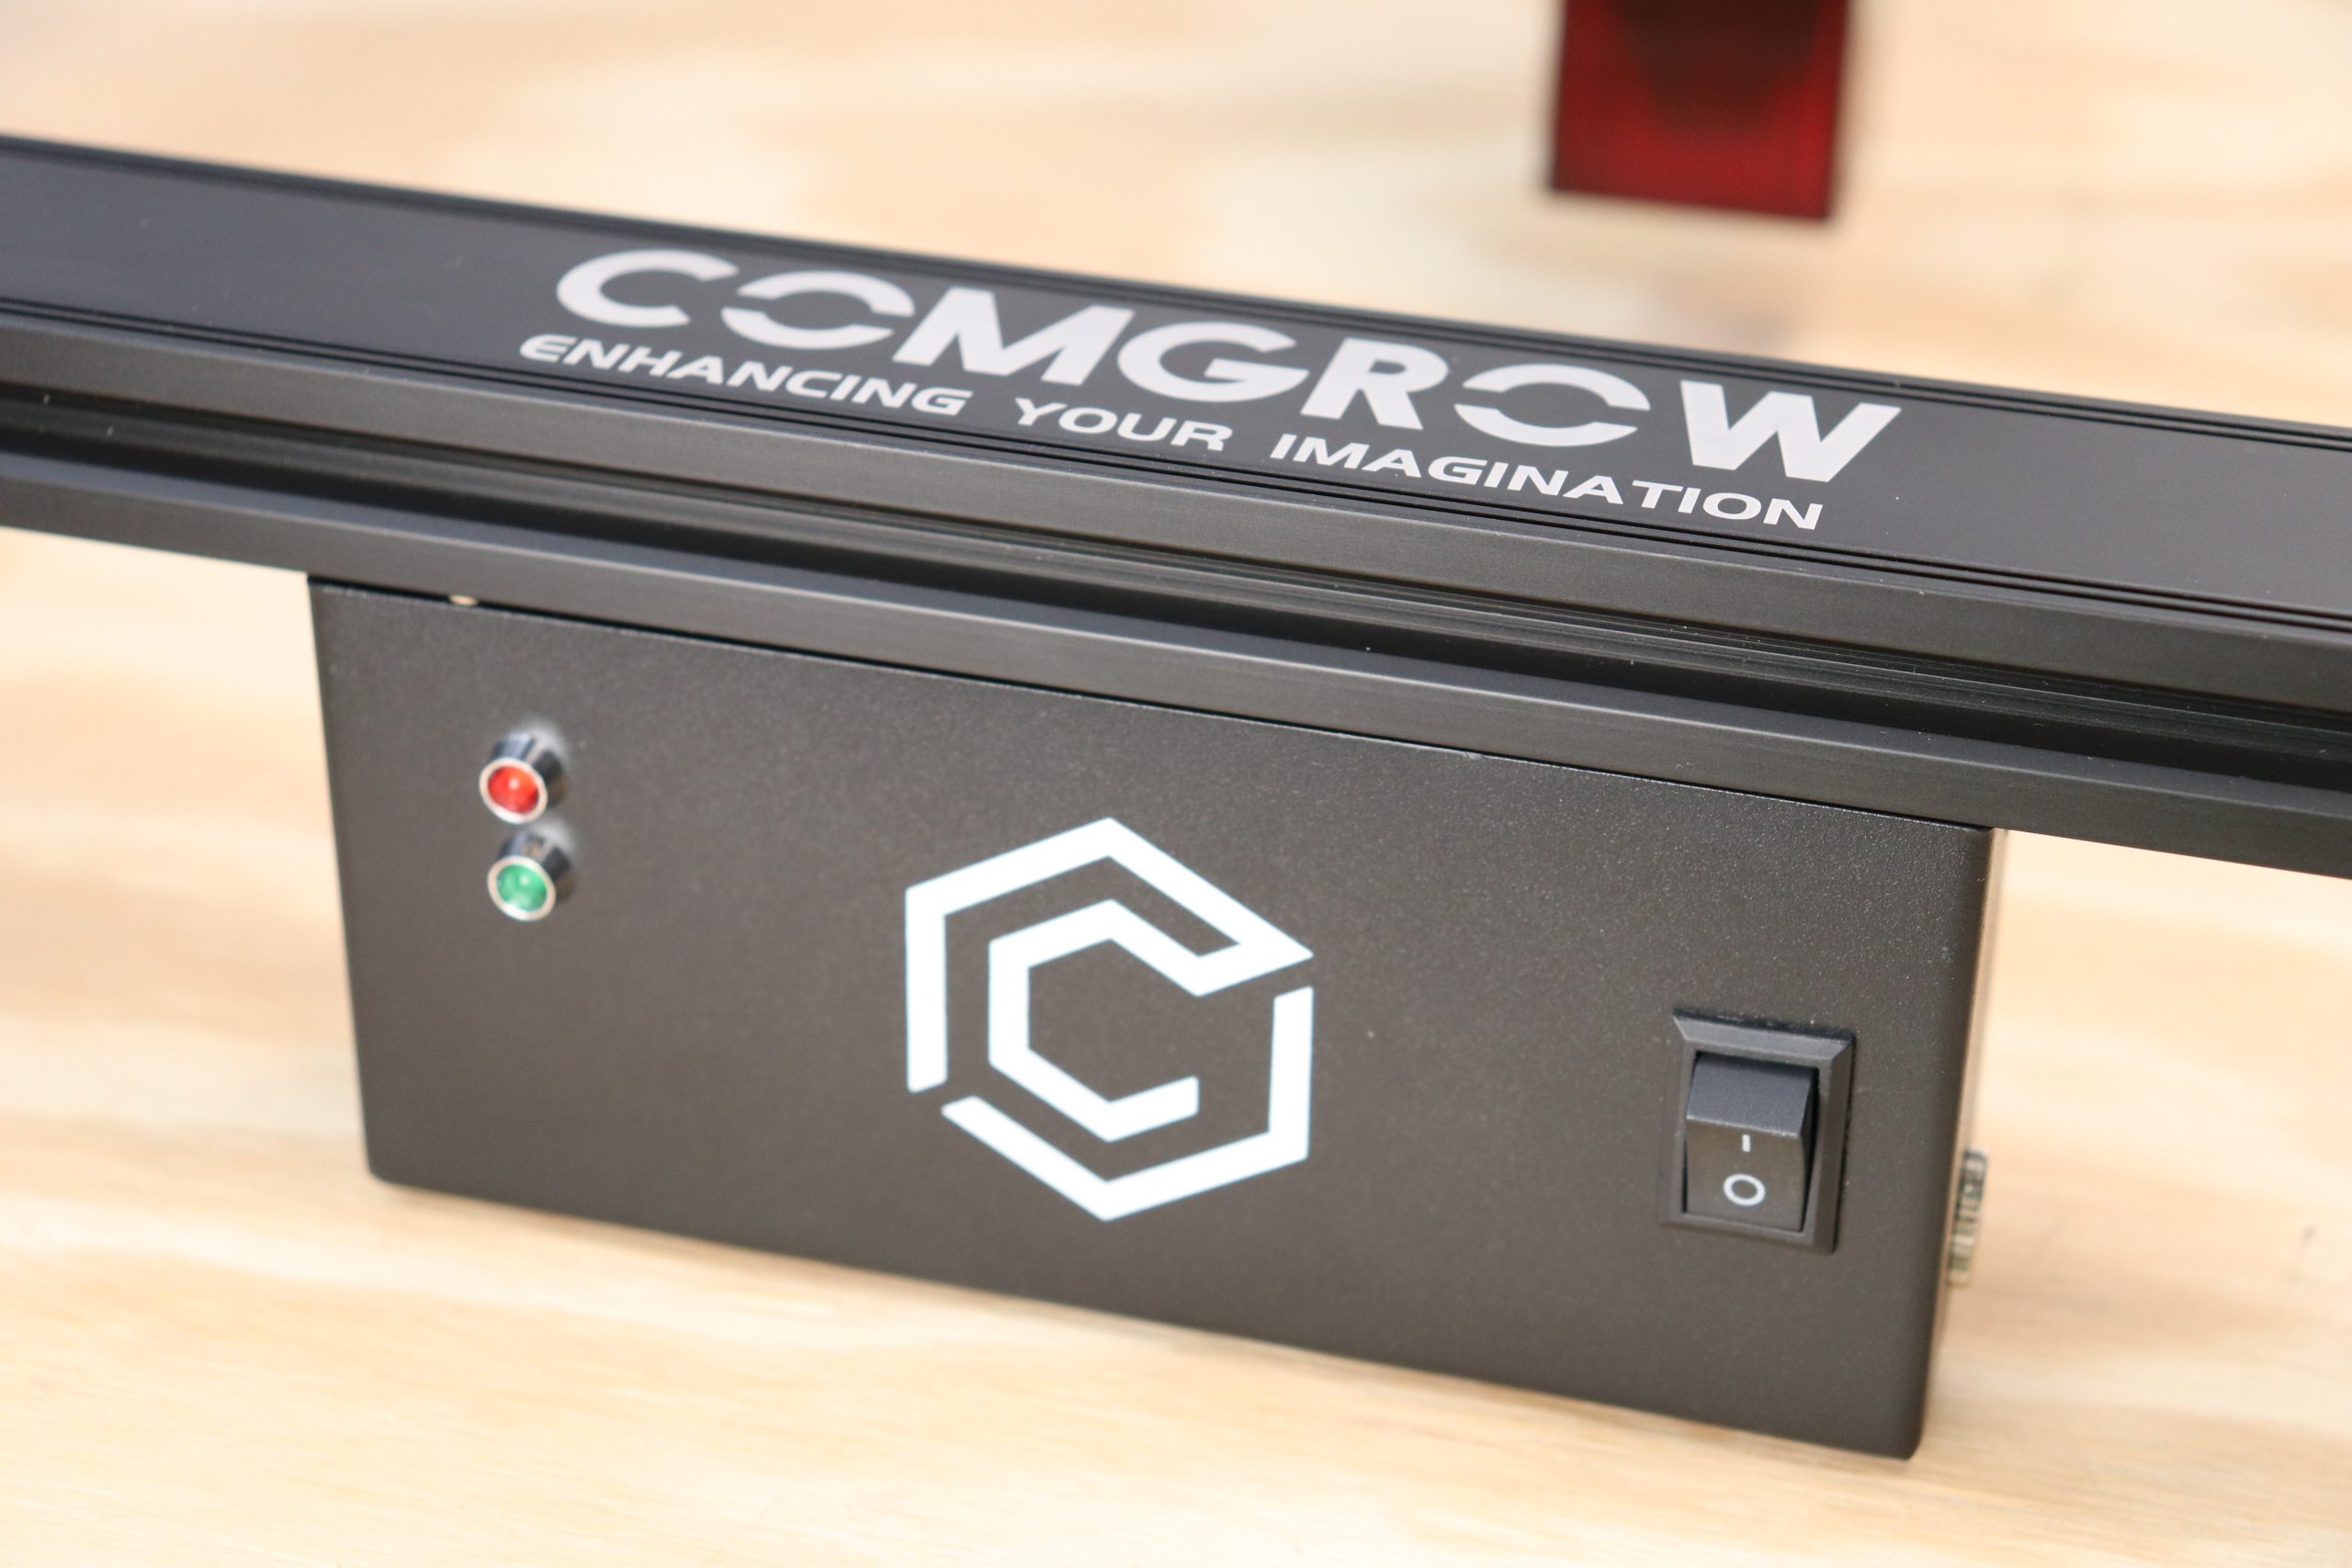 Comgo Z1 Laser Graveur Review - Comgrow Official Store